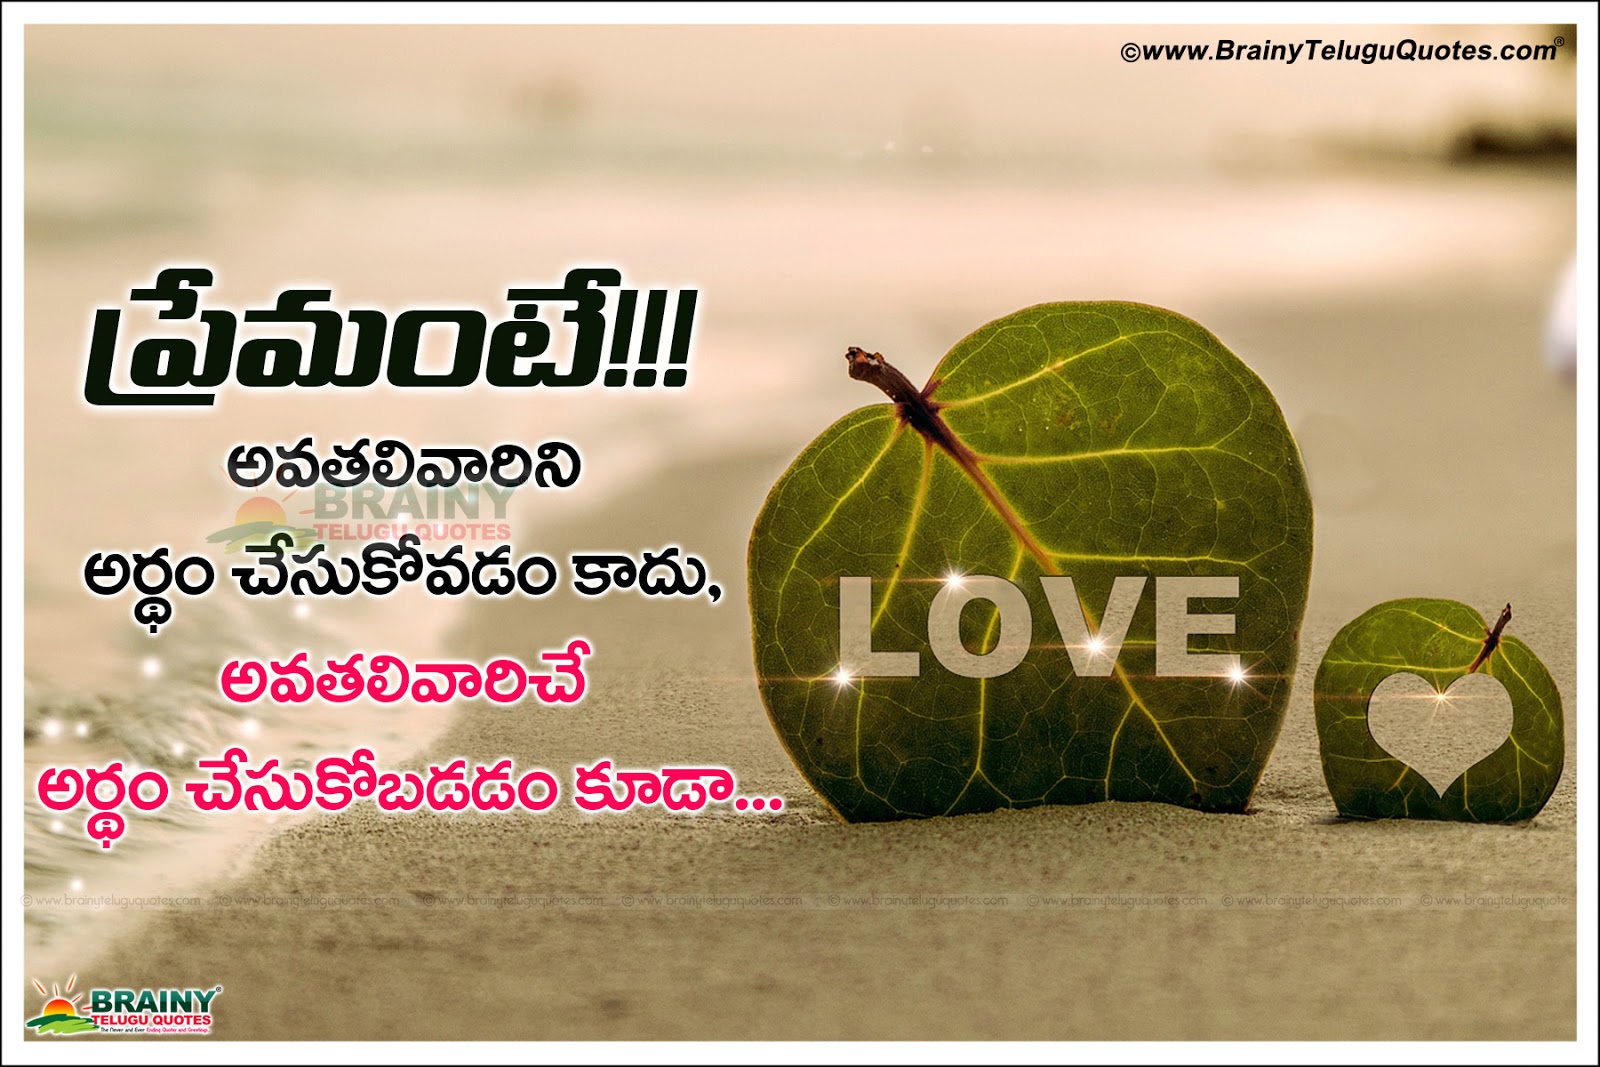 Heart touching telugu love quotes Best Telugu friendship quotes Nice telugu fresh thoughts about love and friendship Best telugu inspirational Quotes